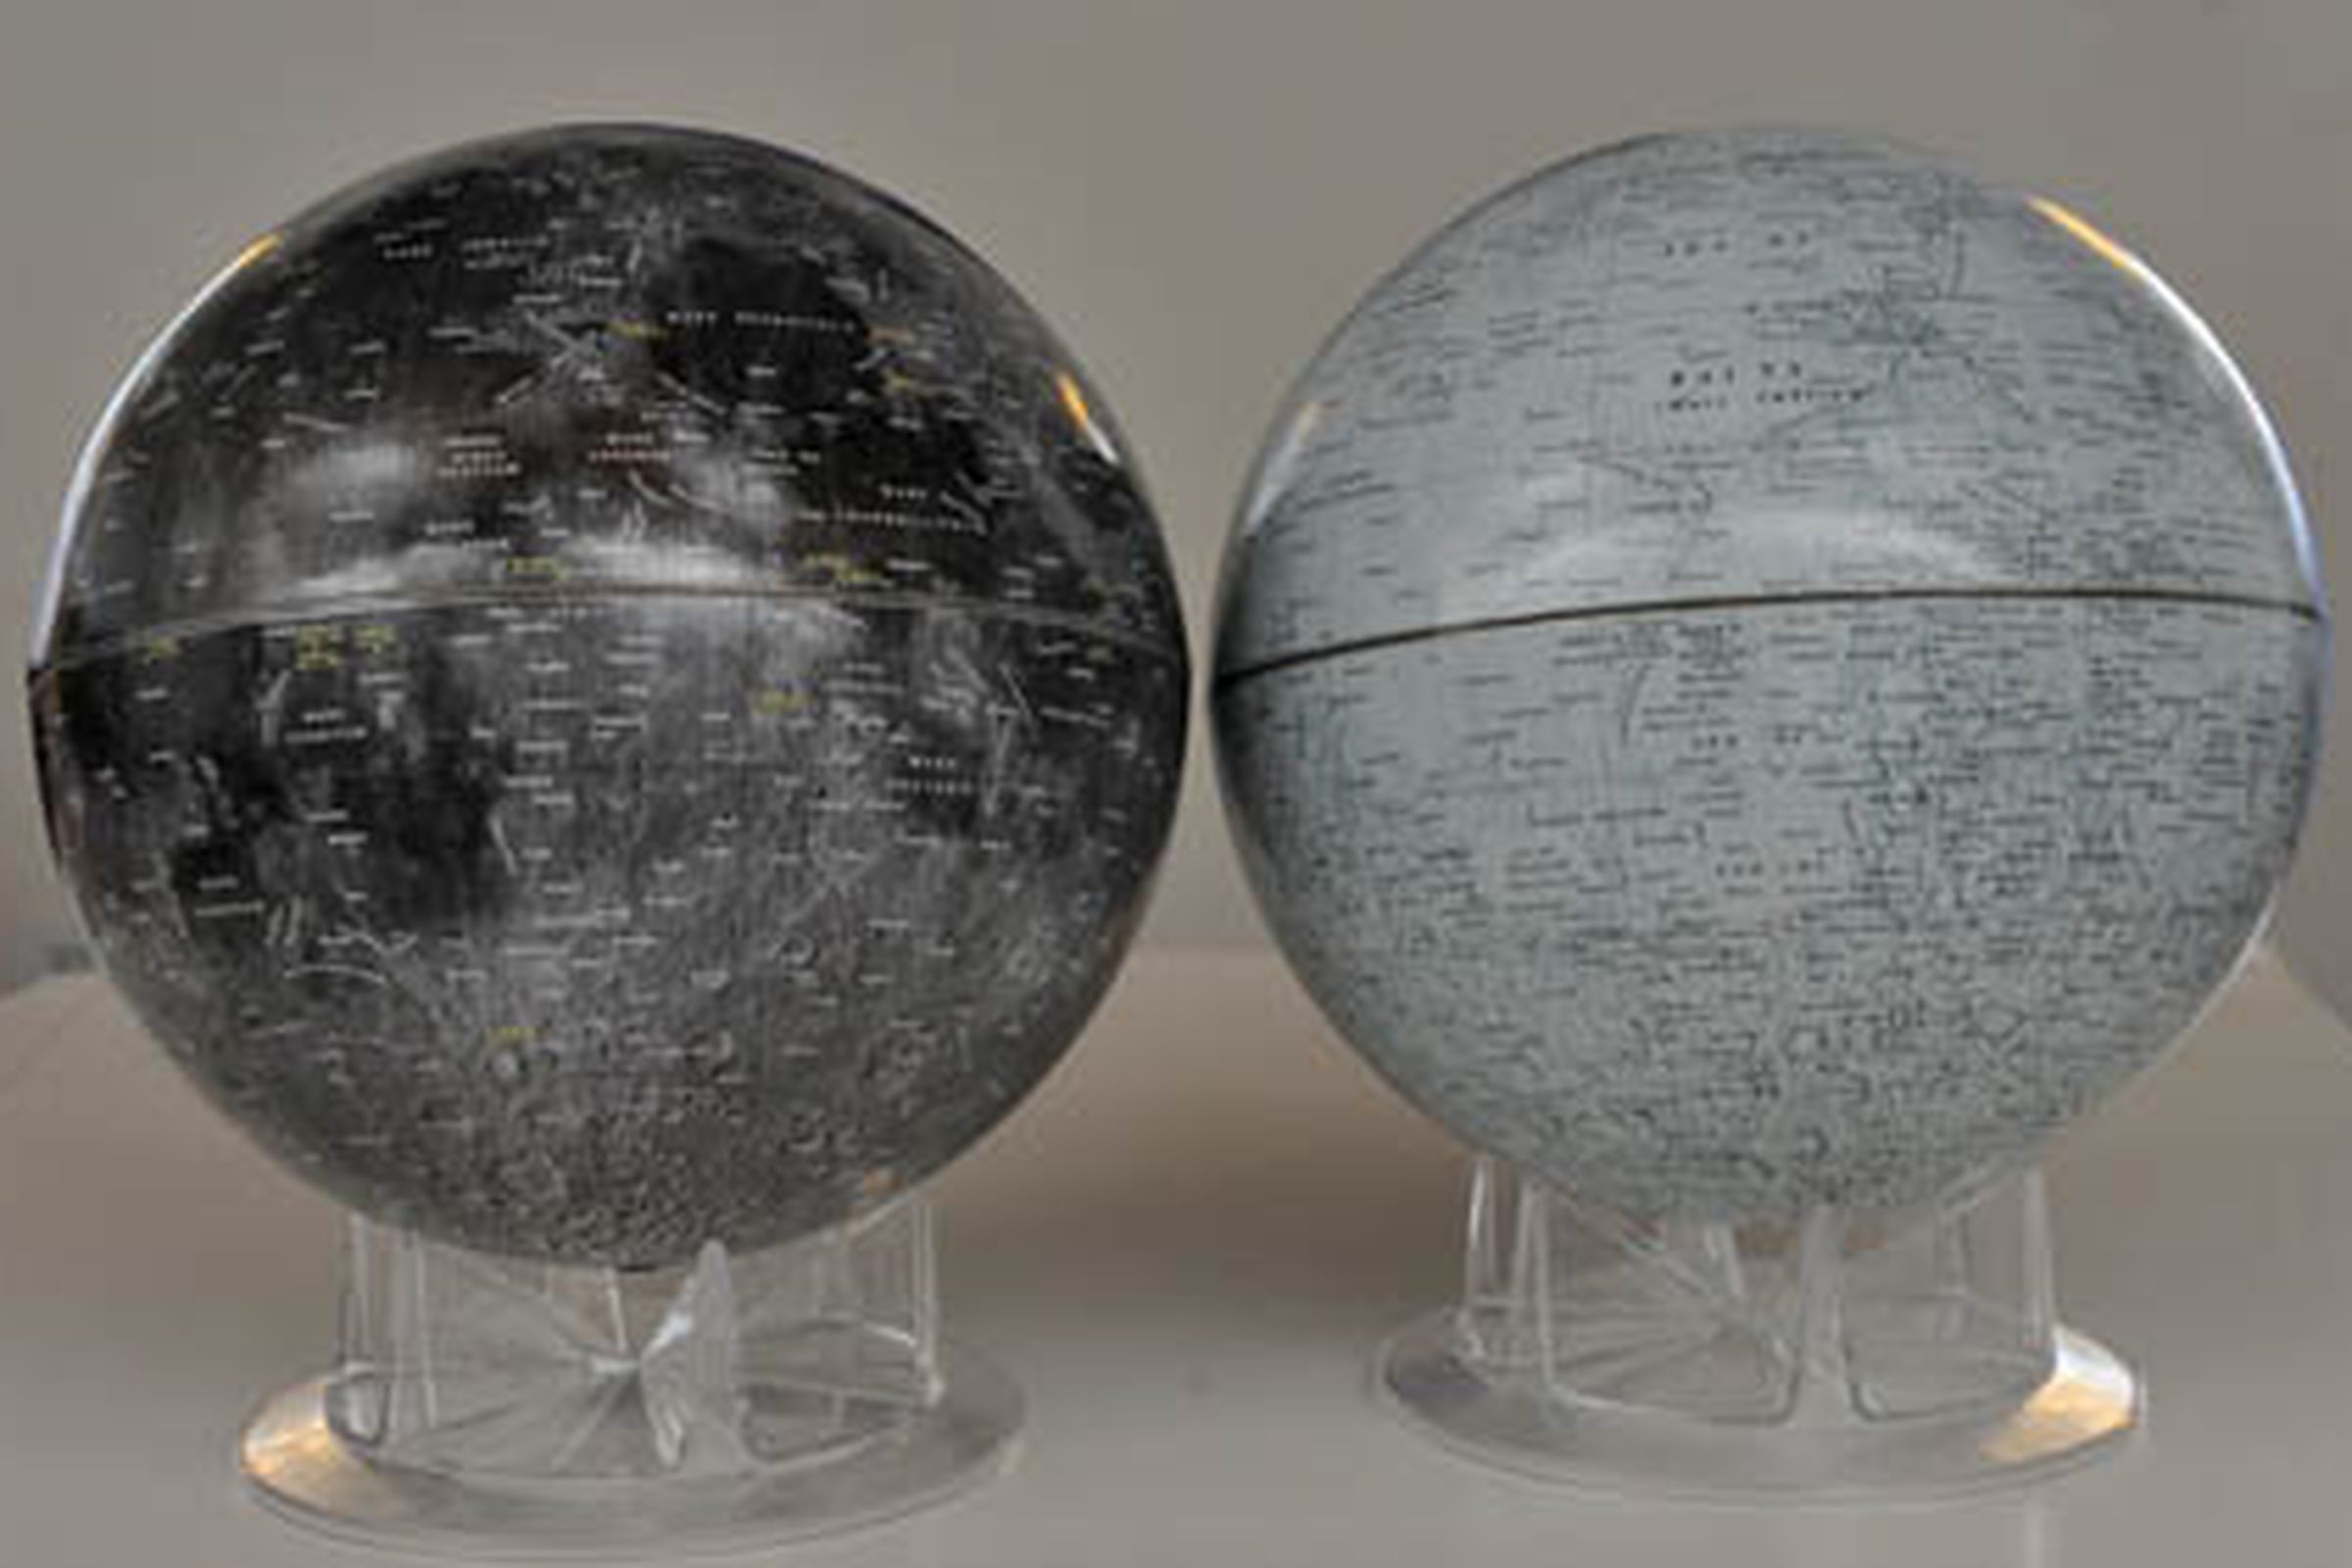 Sky & Telescope moon globe